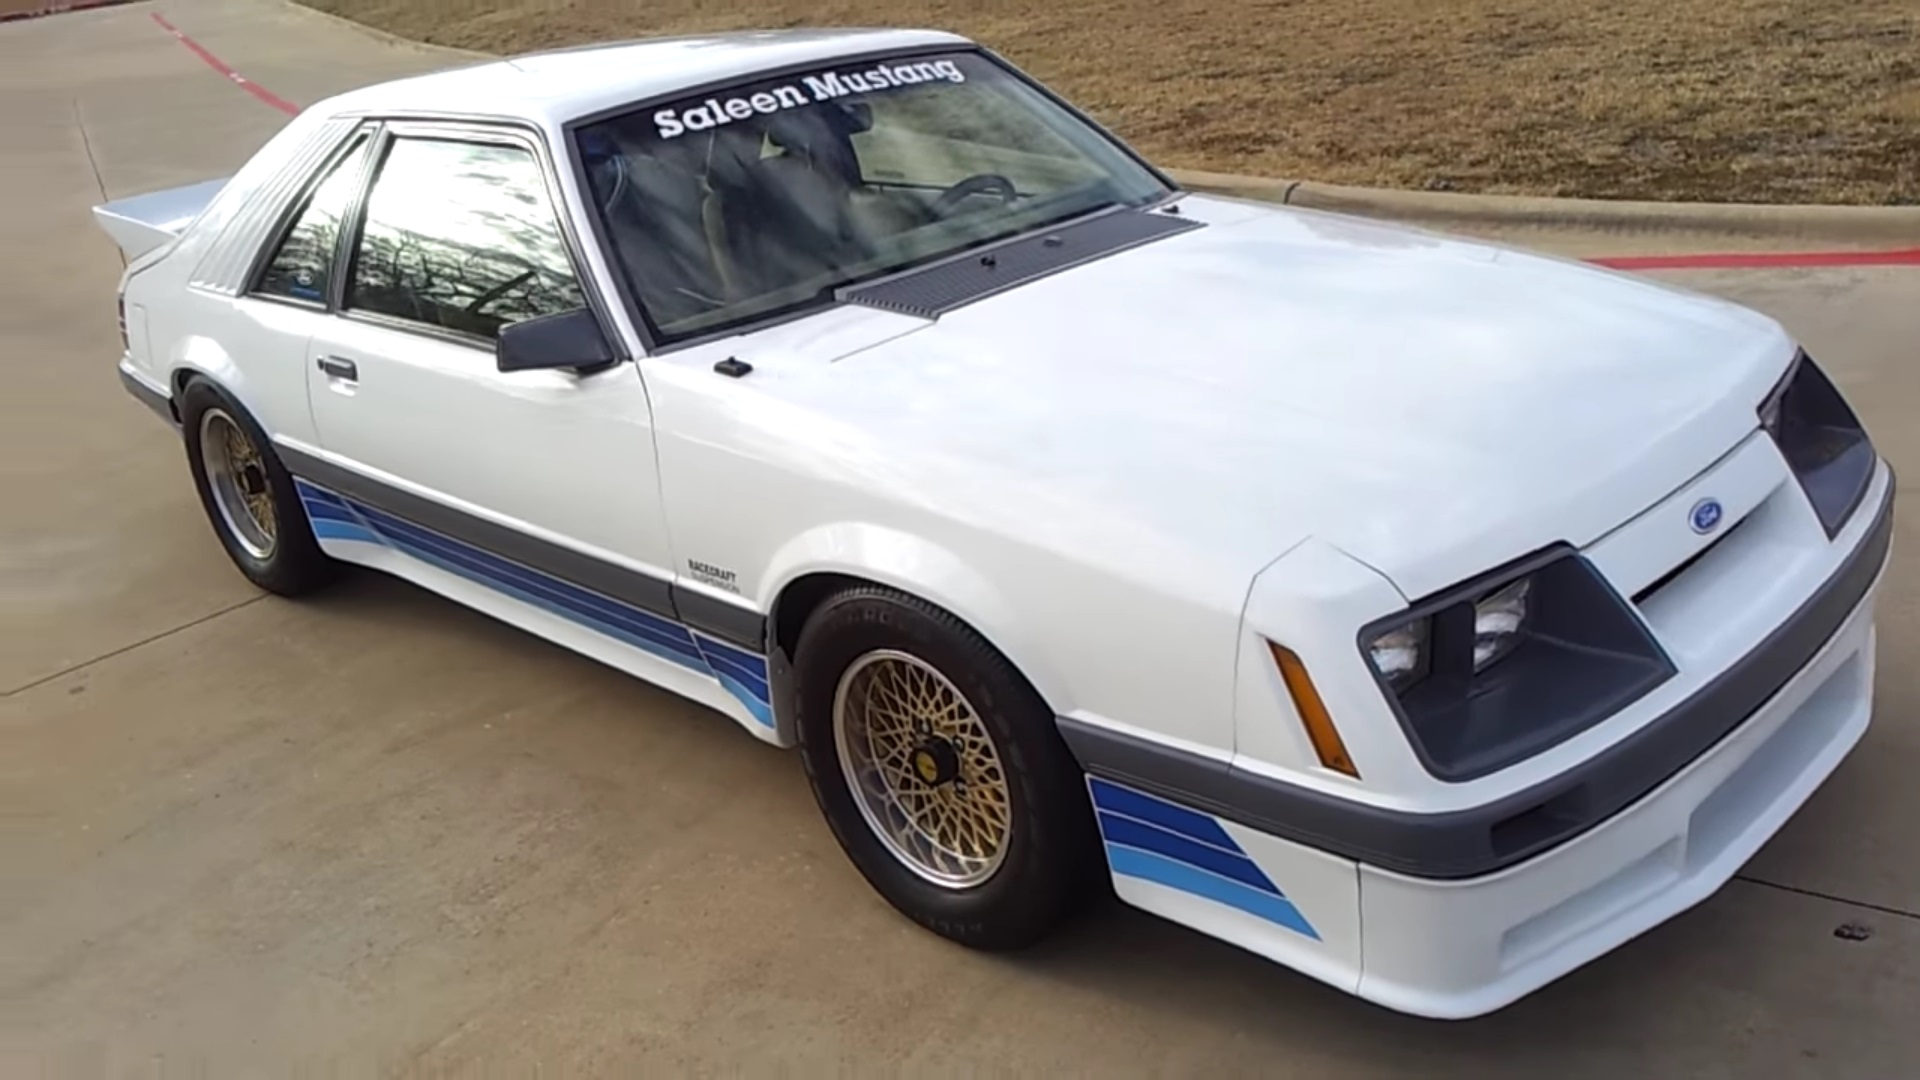 Video: 1985 Saleen Mustang Walkaround